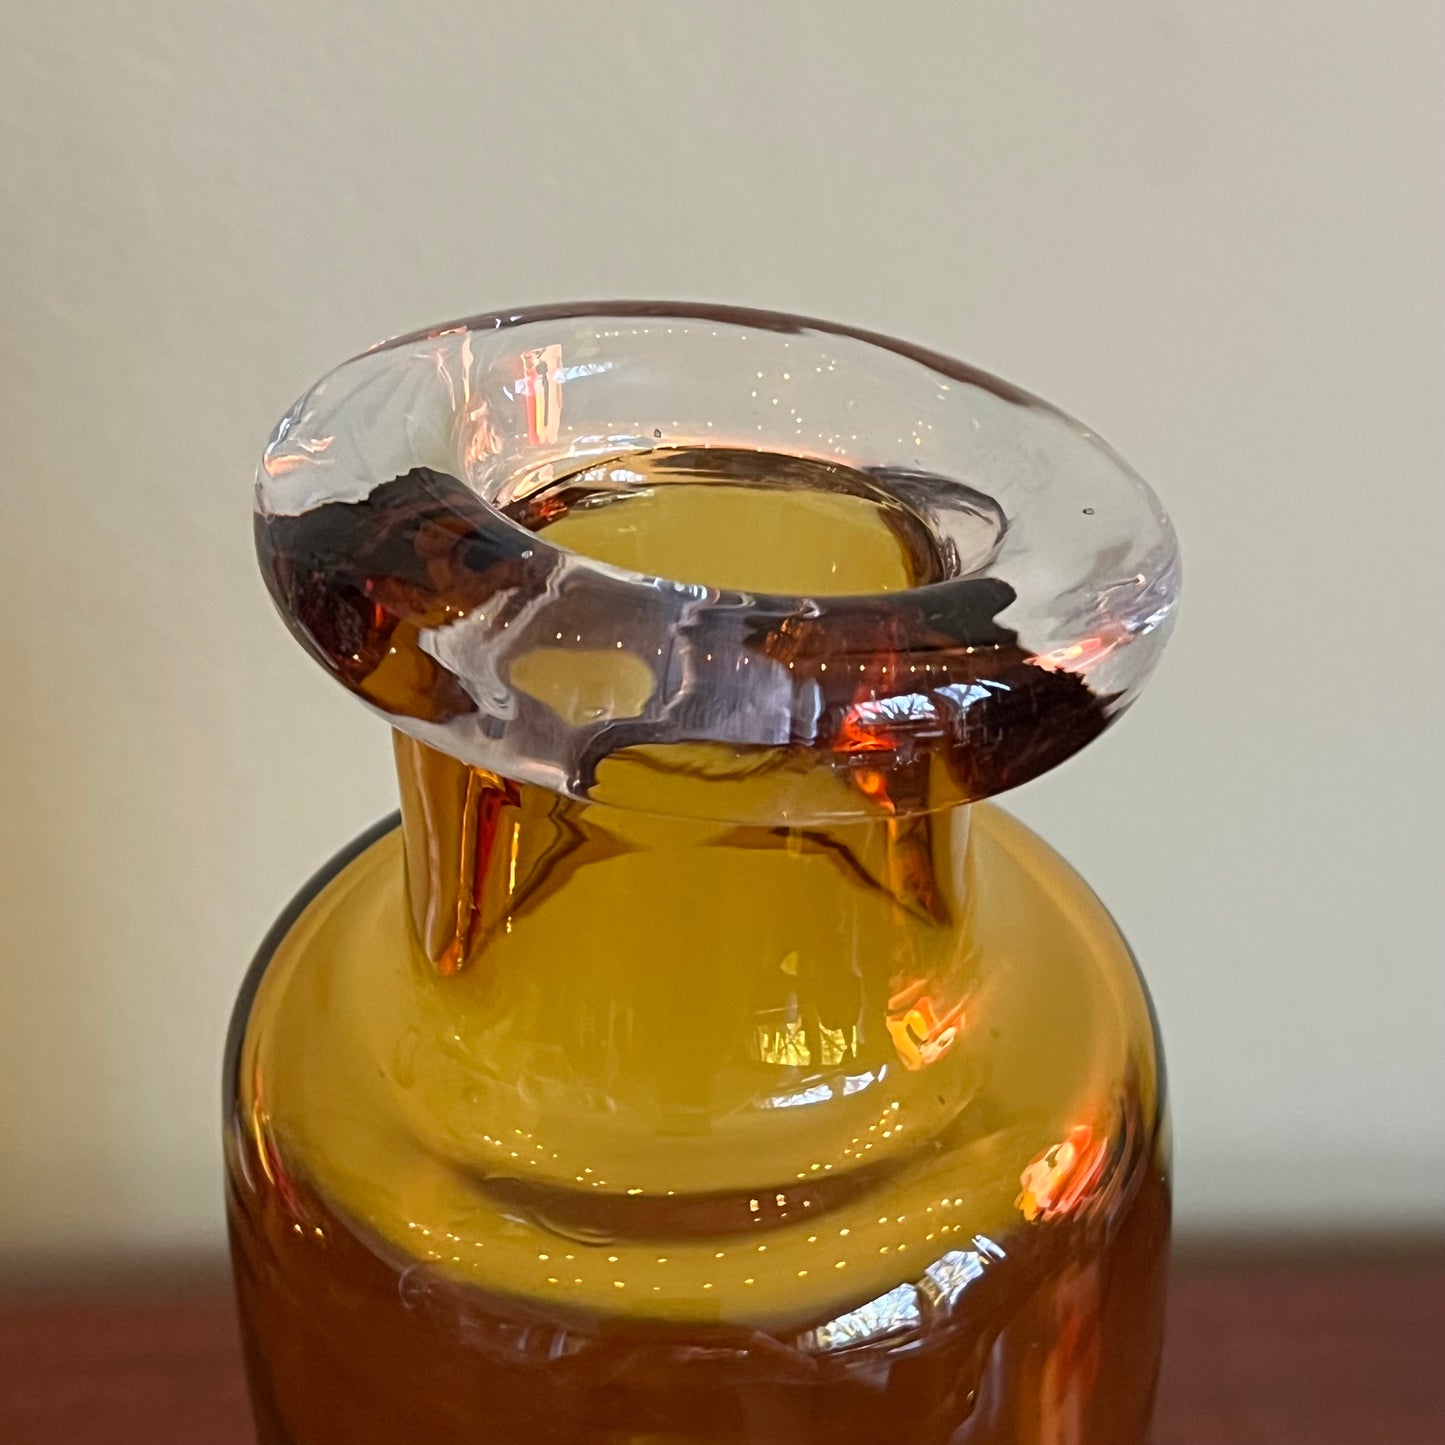 Vintage Hand Blown Amber Glass Bottle